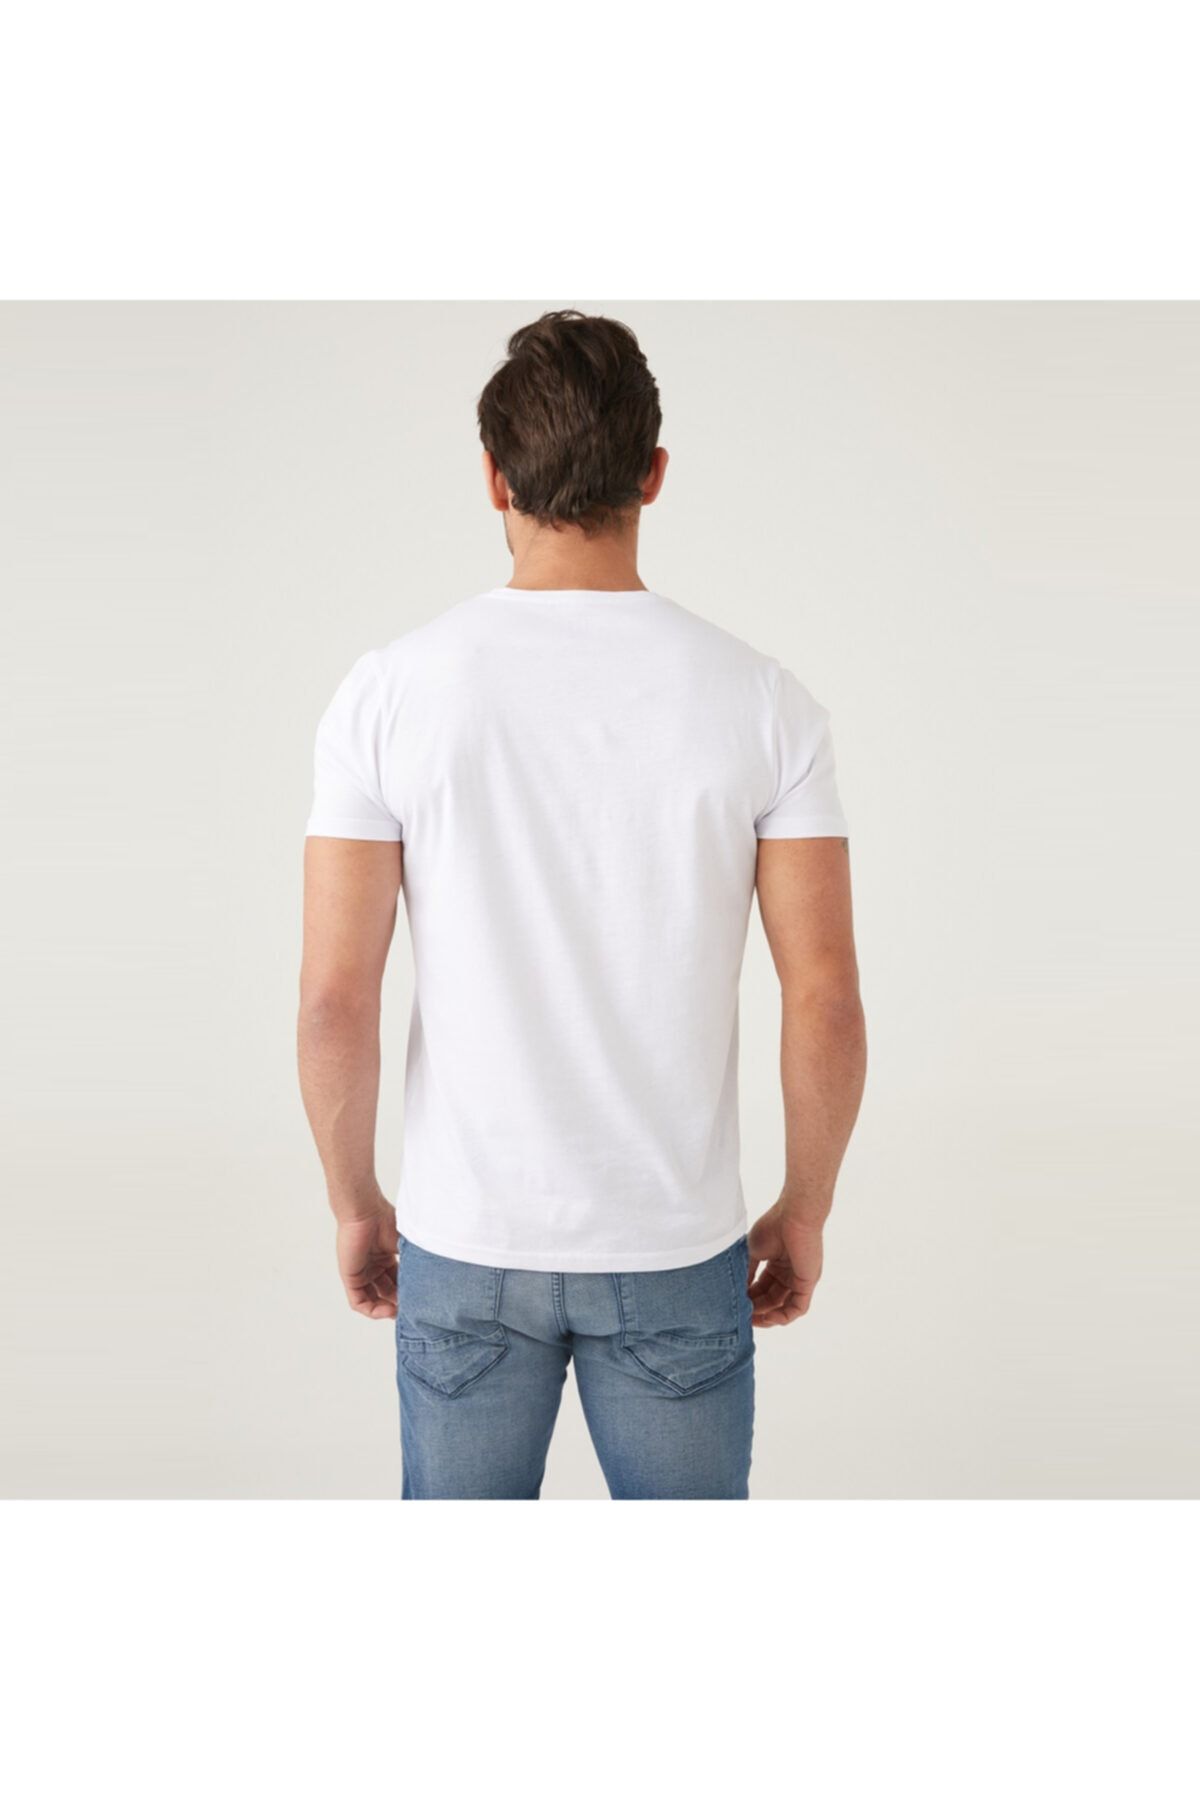 Five Pocket Erkek Beyaz Tişört (8207-fy16)